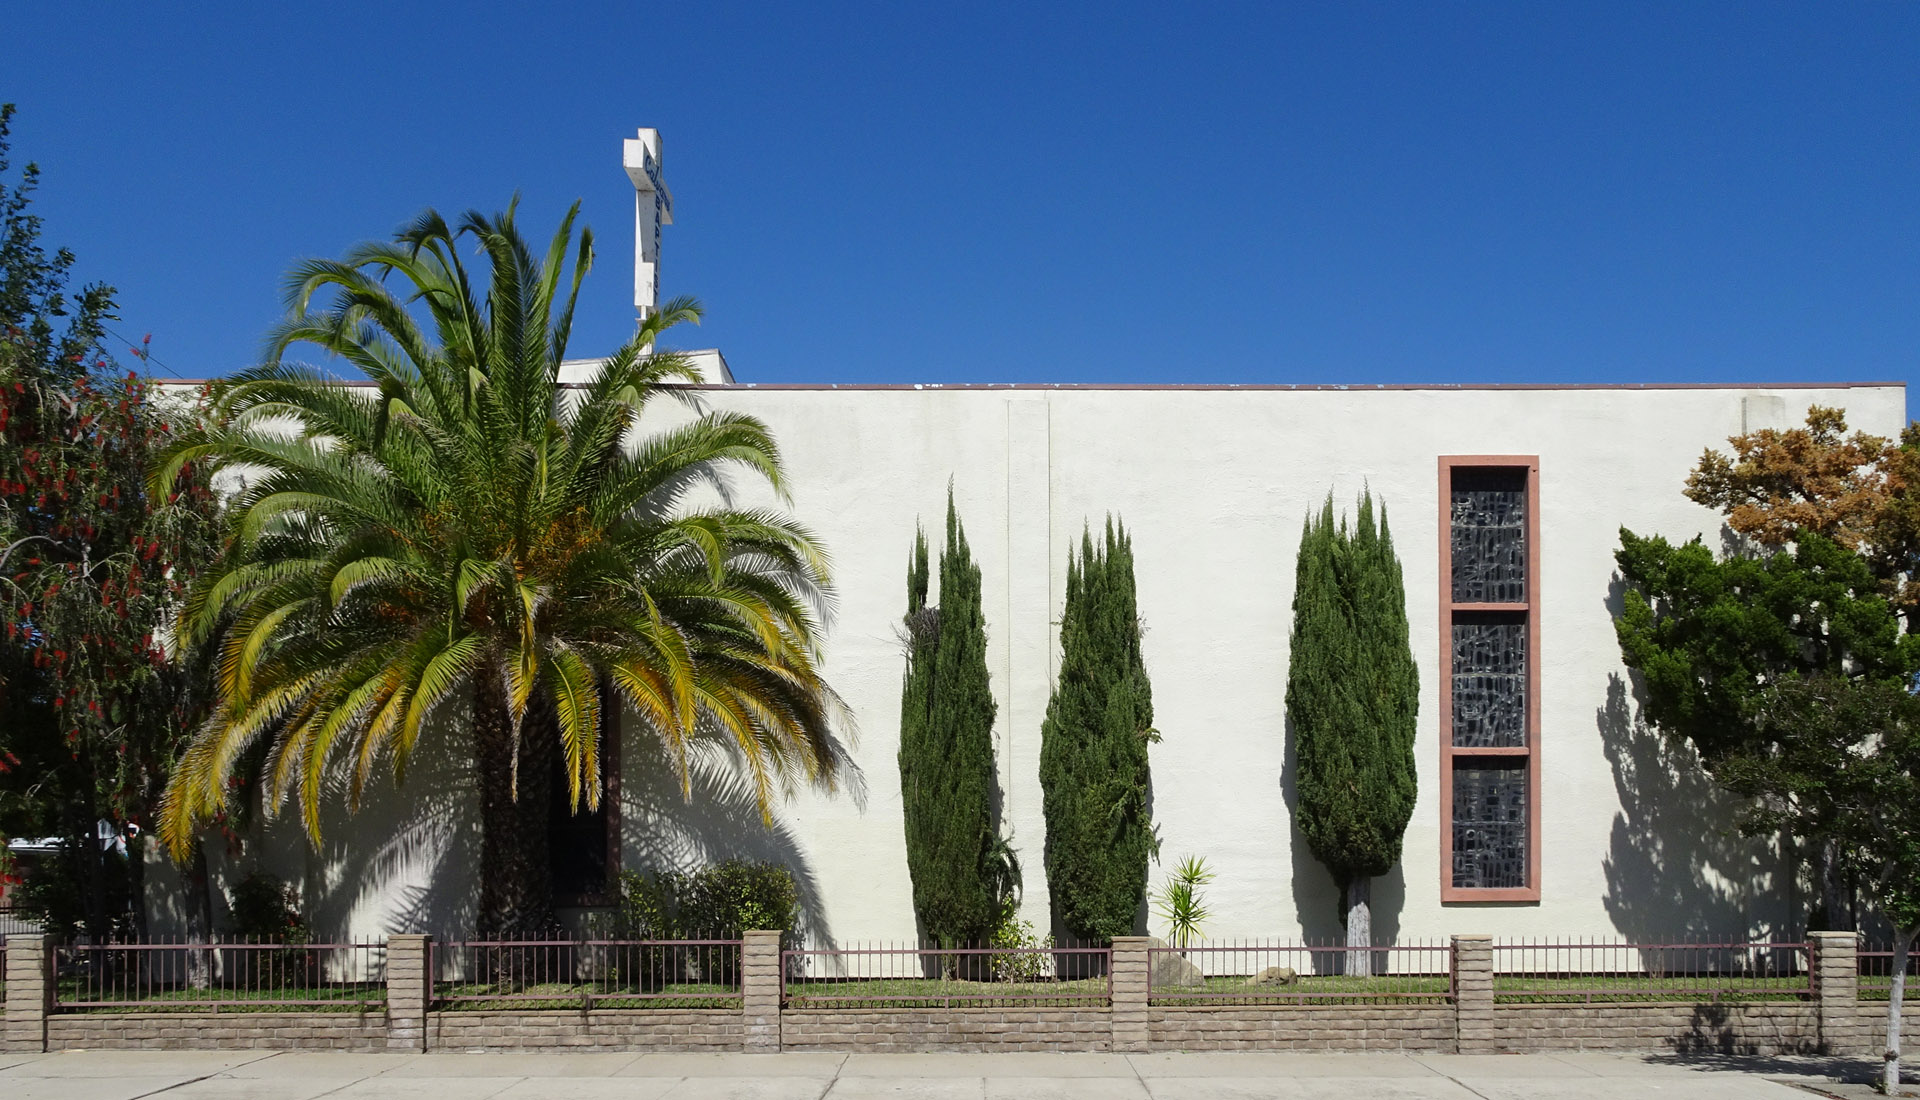 Calvary Baptist Church of Pacoima